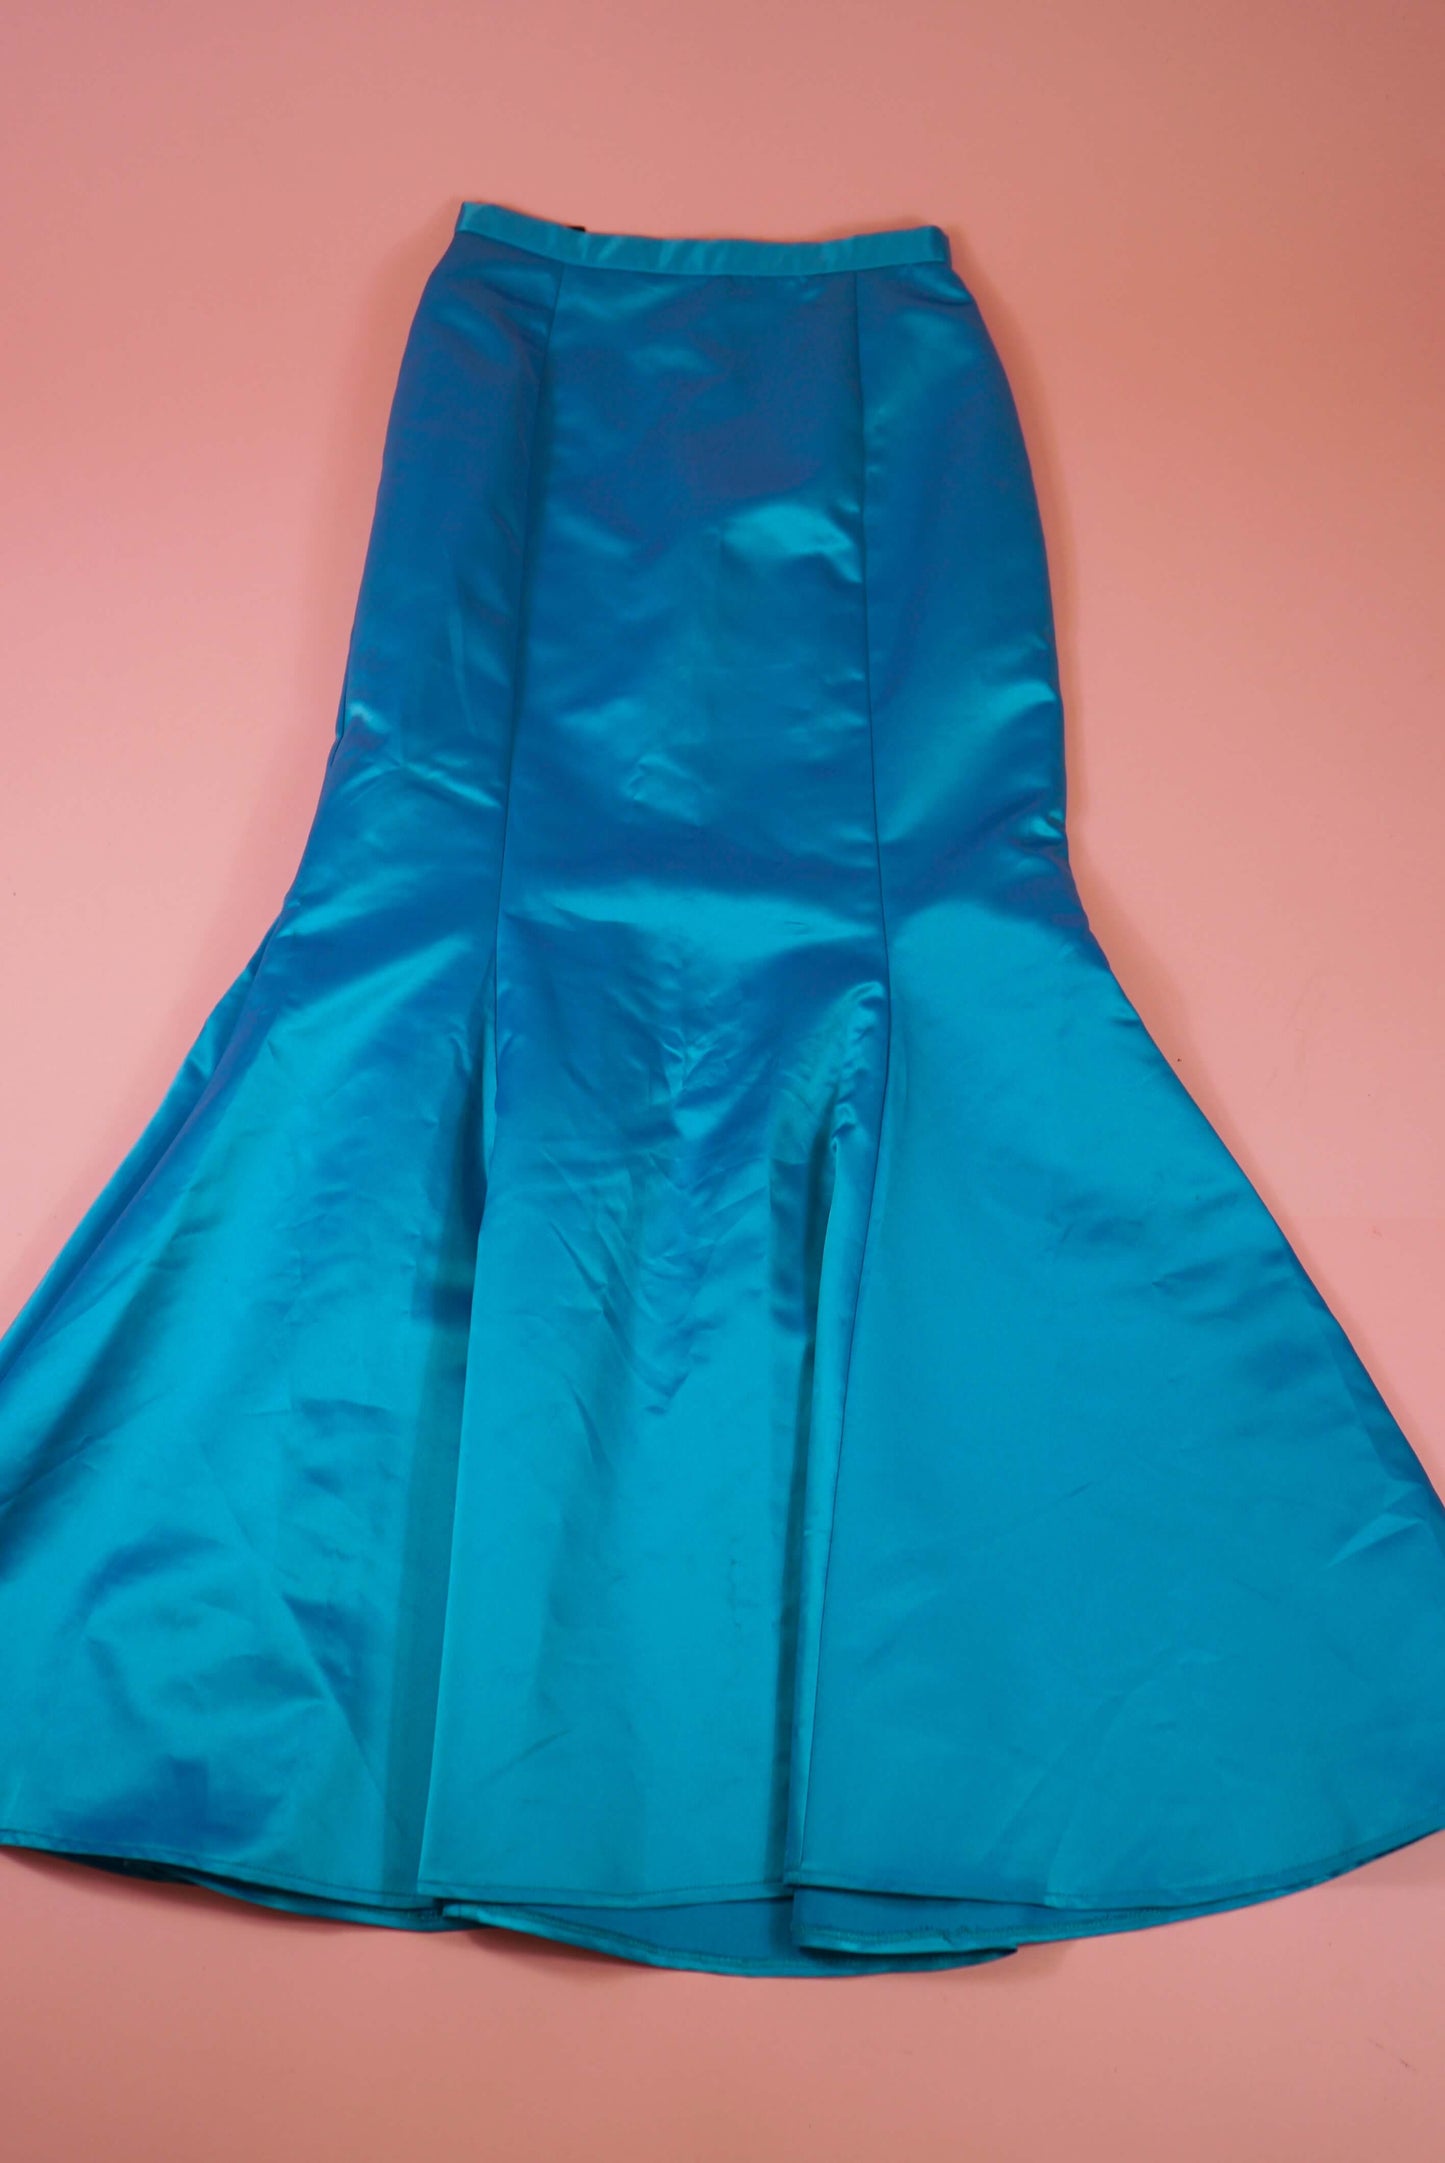 Long Mermaid Skirt Vintage Blue Fish Tail Maxi Skirt Size XS W24-25 / UK Size 6/ EU 34